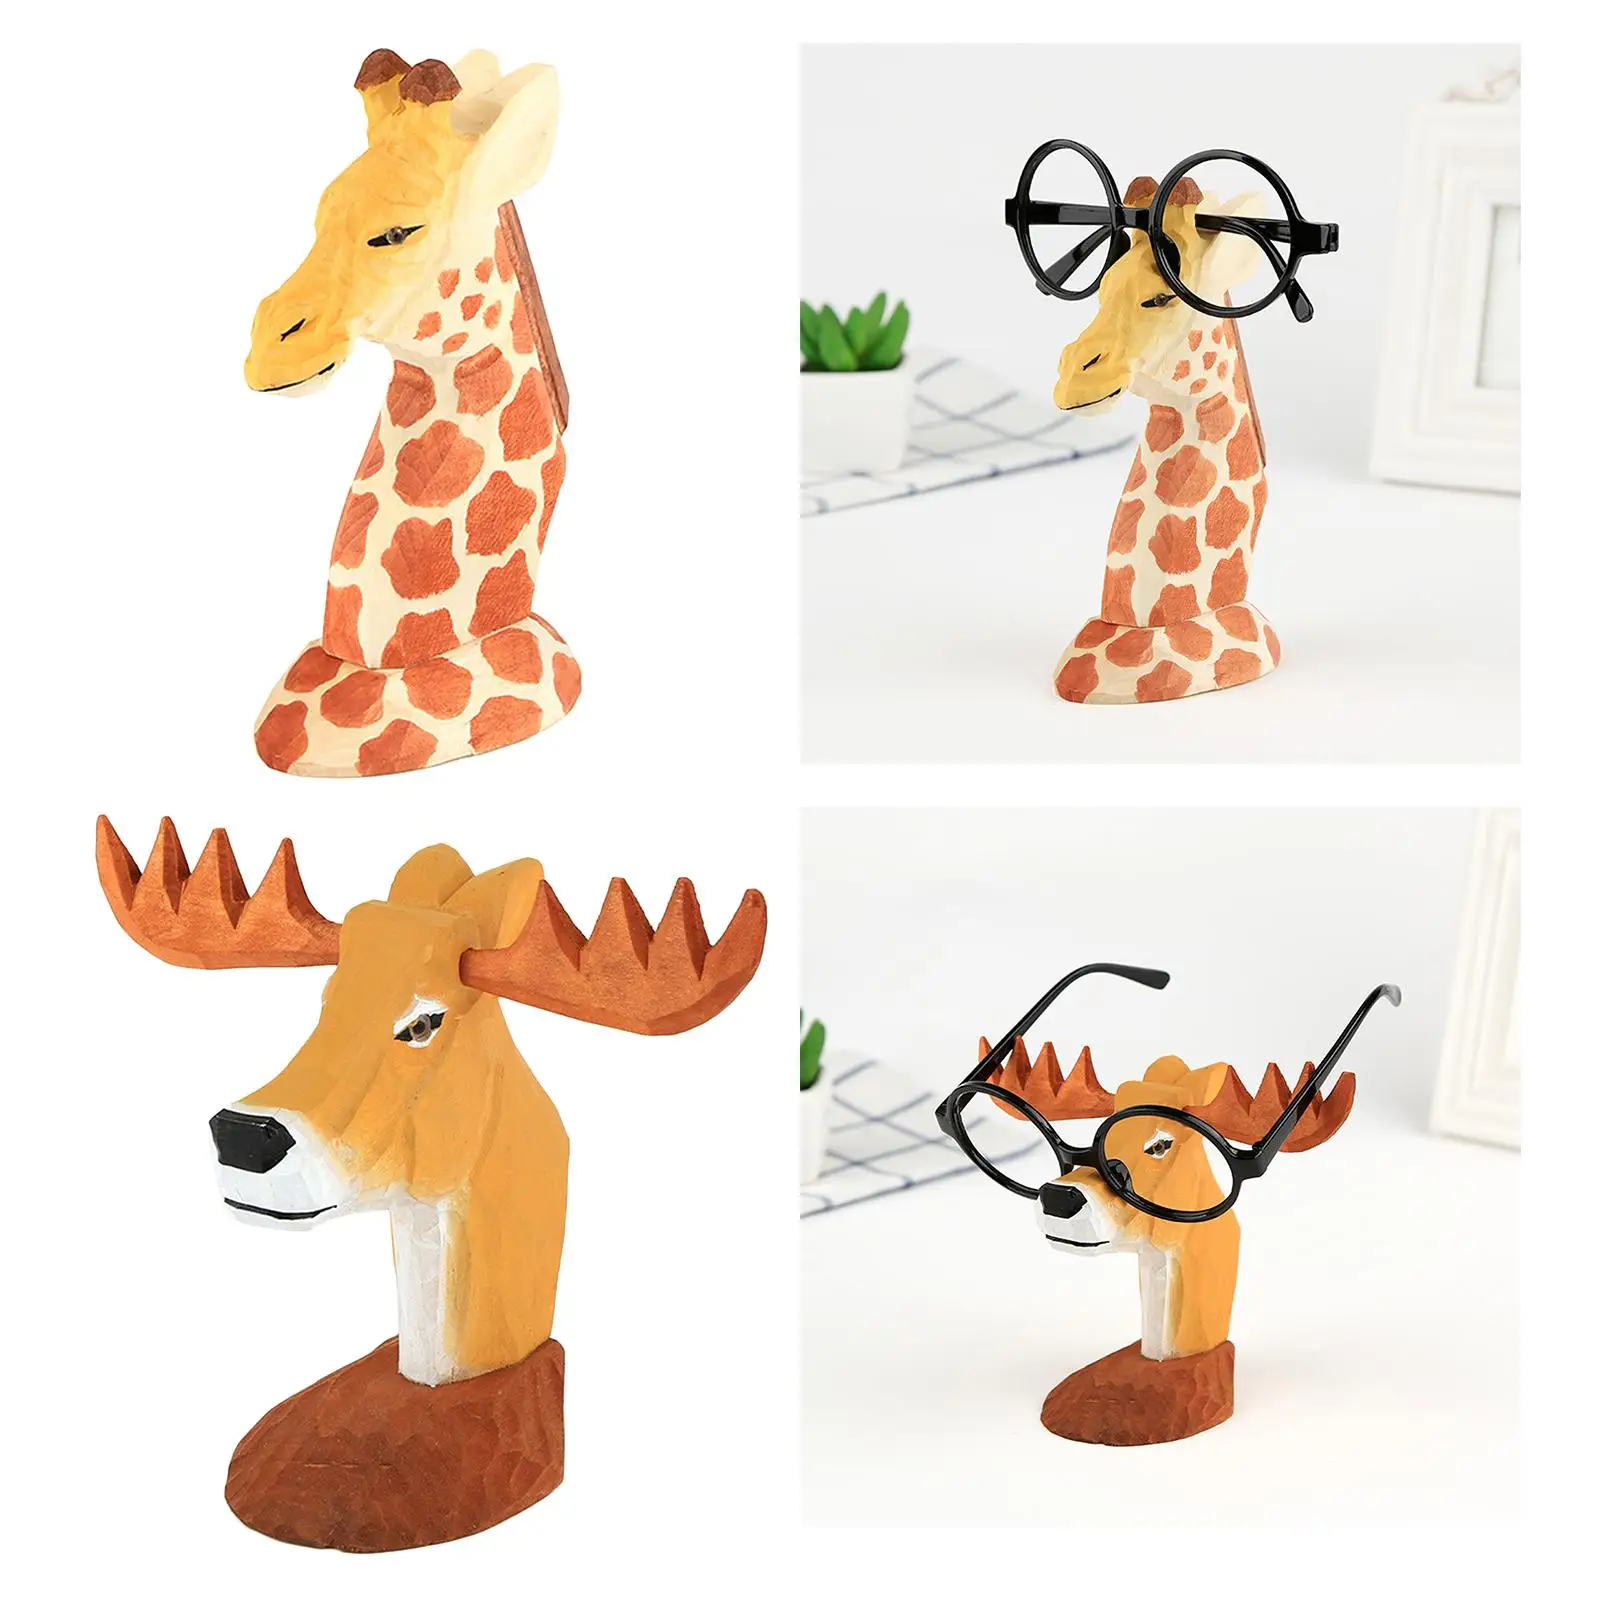 Eyeglass Spectacle Holder Stand, Eyeglass Holder Stand Funny, Creative Eyeglass Display Stand for Glasses, Desk Decoration